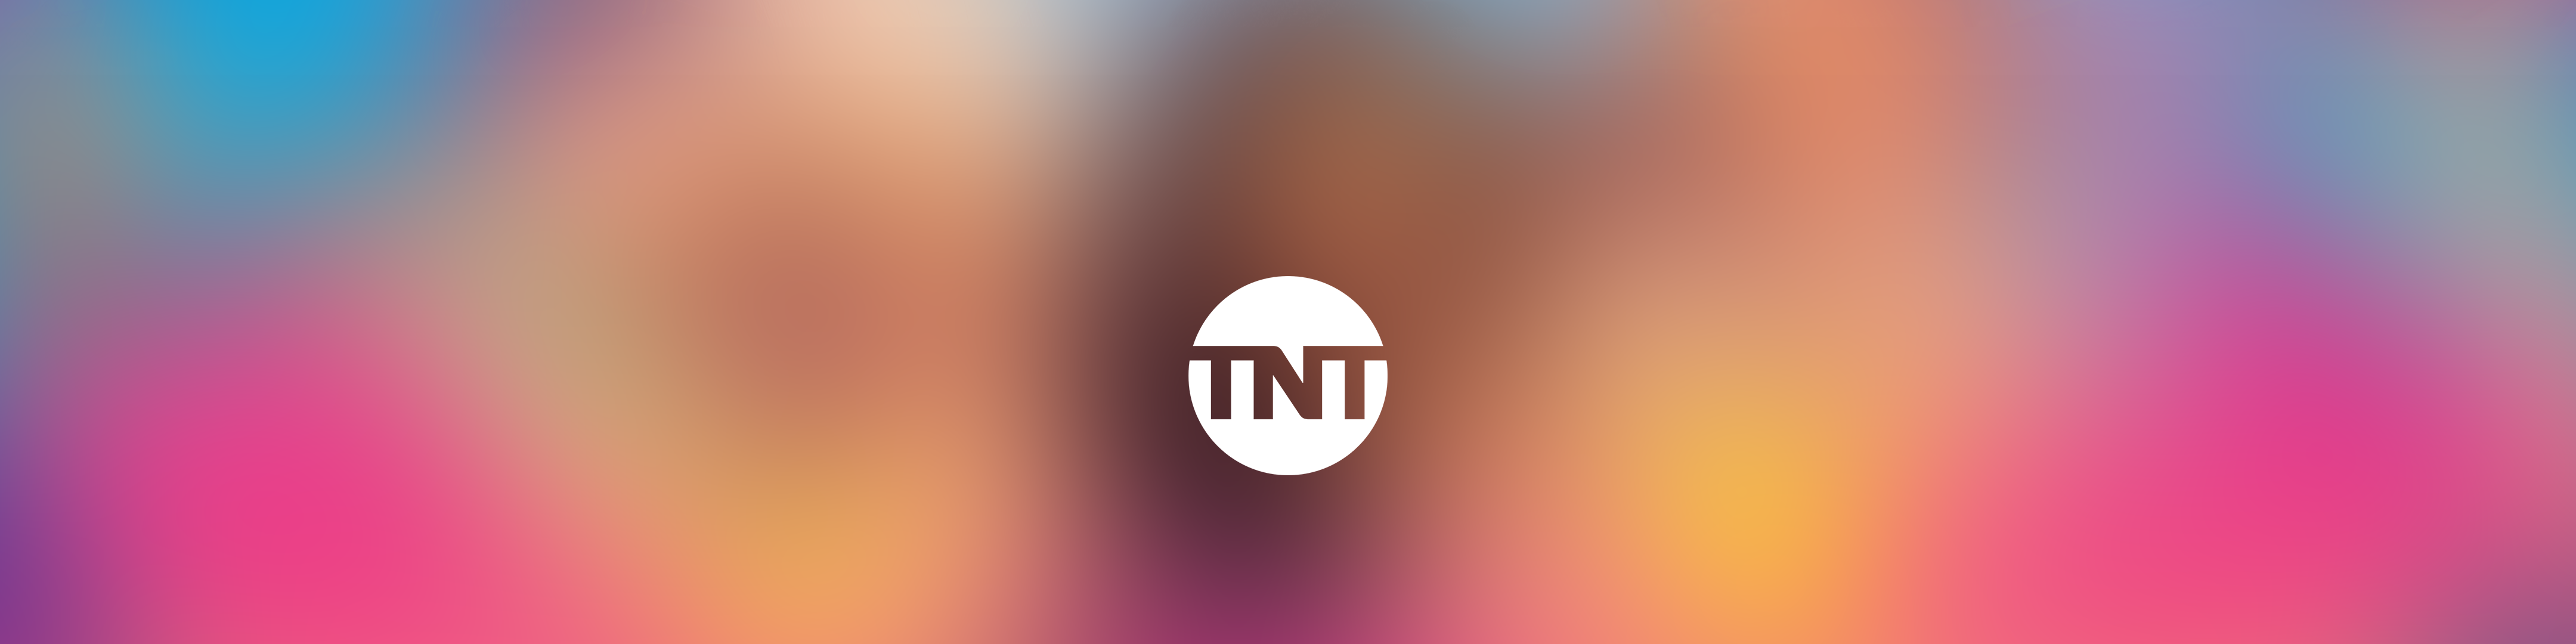 Watch TNT - Overview - Apple App Store - US